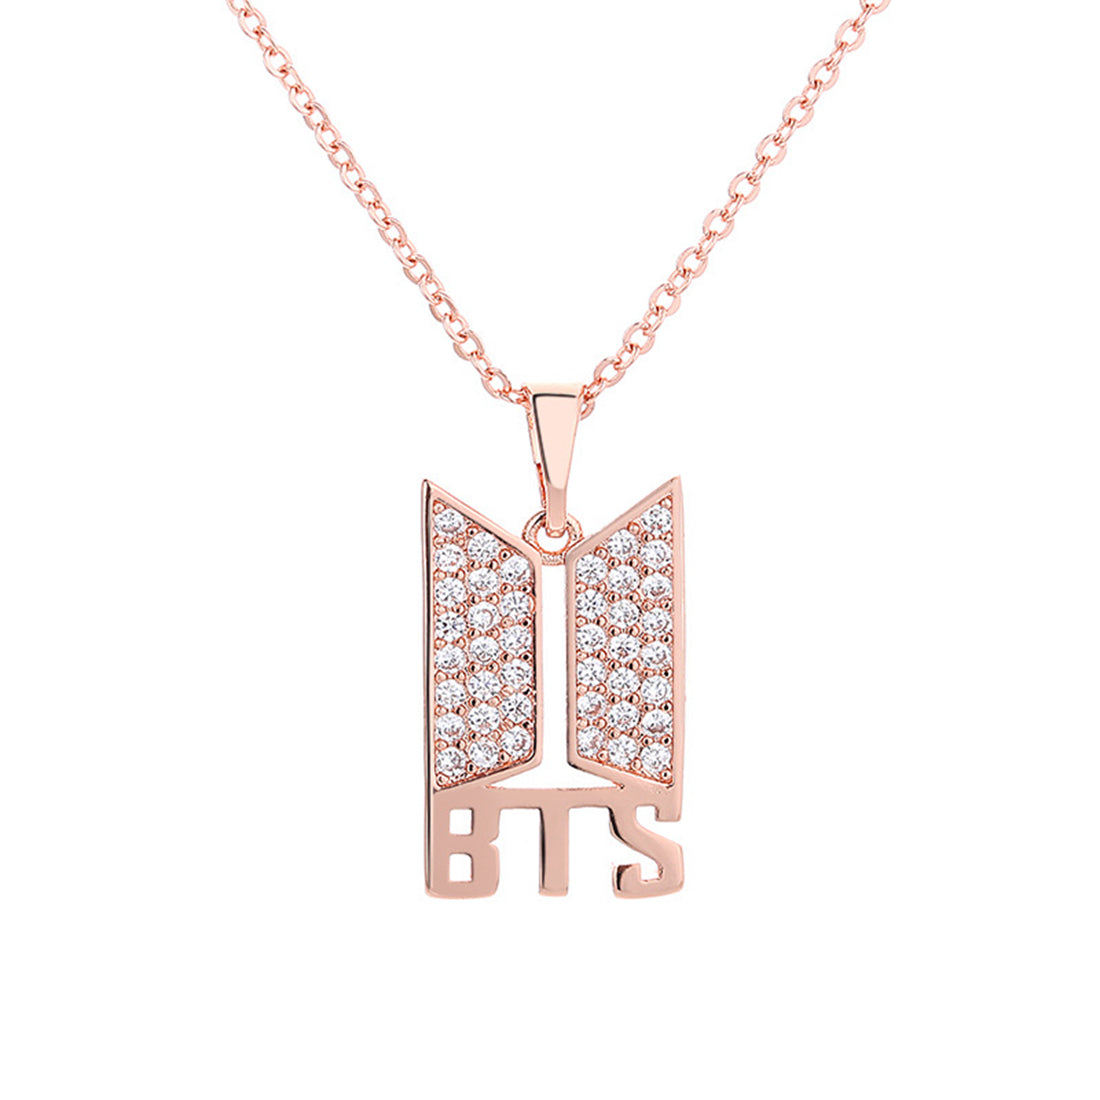 SANNIDHI Bts Rhombus Pendant Necklace For Bts Army Fans Gifts,Alloy Rhinestone Design For Women Girls Boys(Rose Golden)